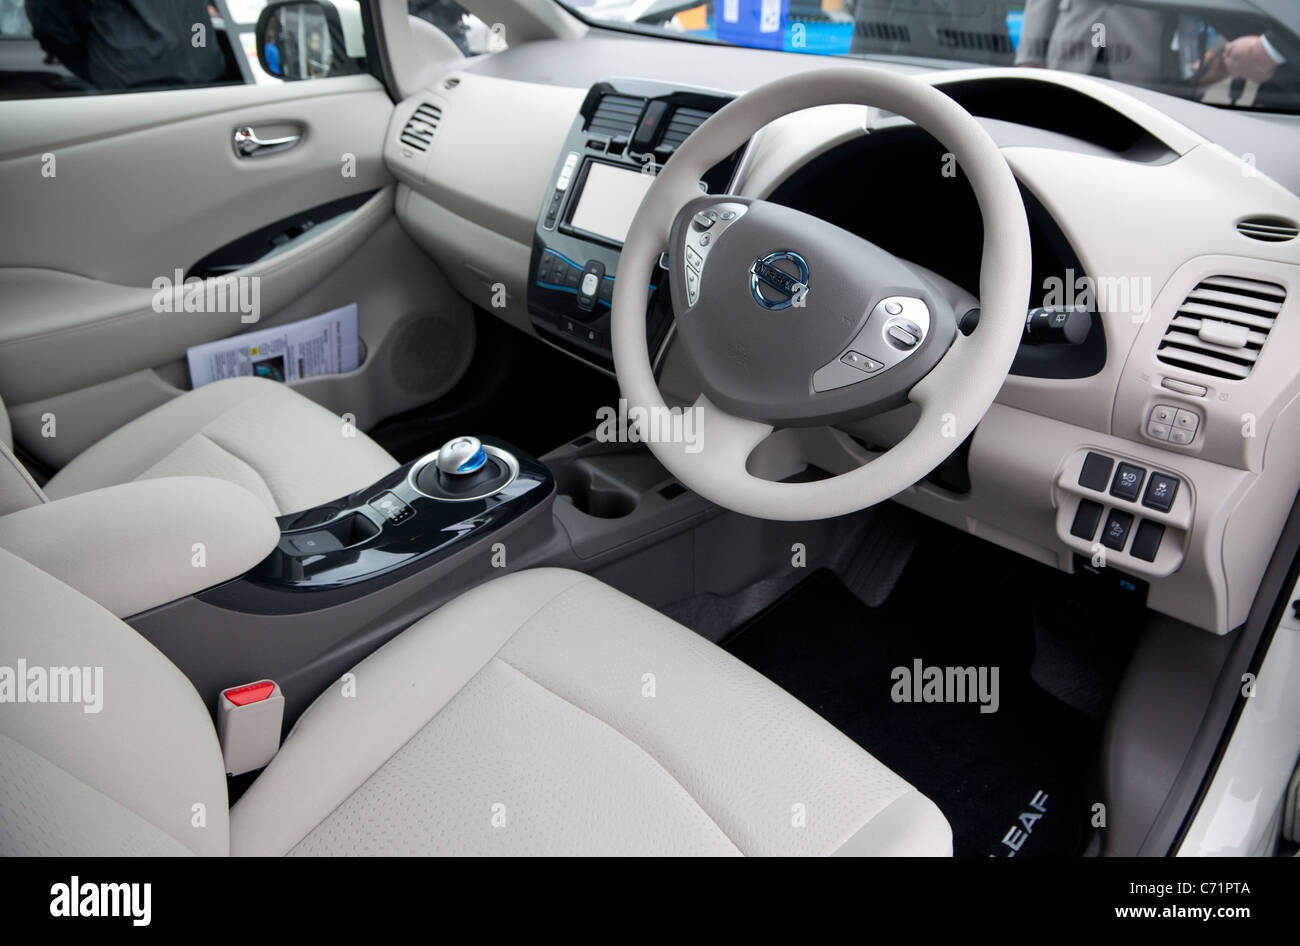 Ecovelocity motor festival London - Nissan Leaf electric car interior Stock Photo